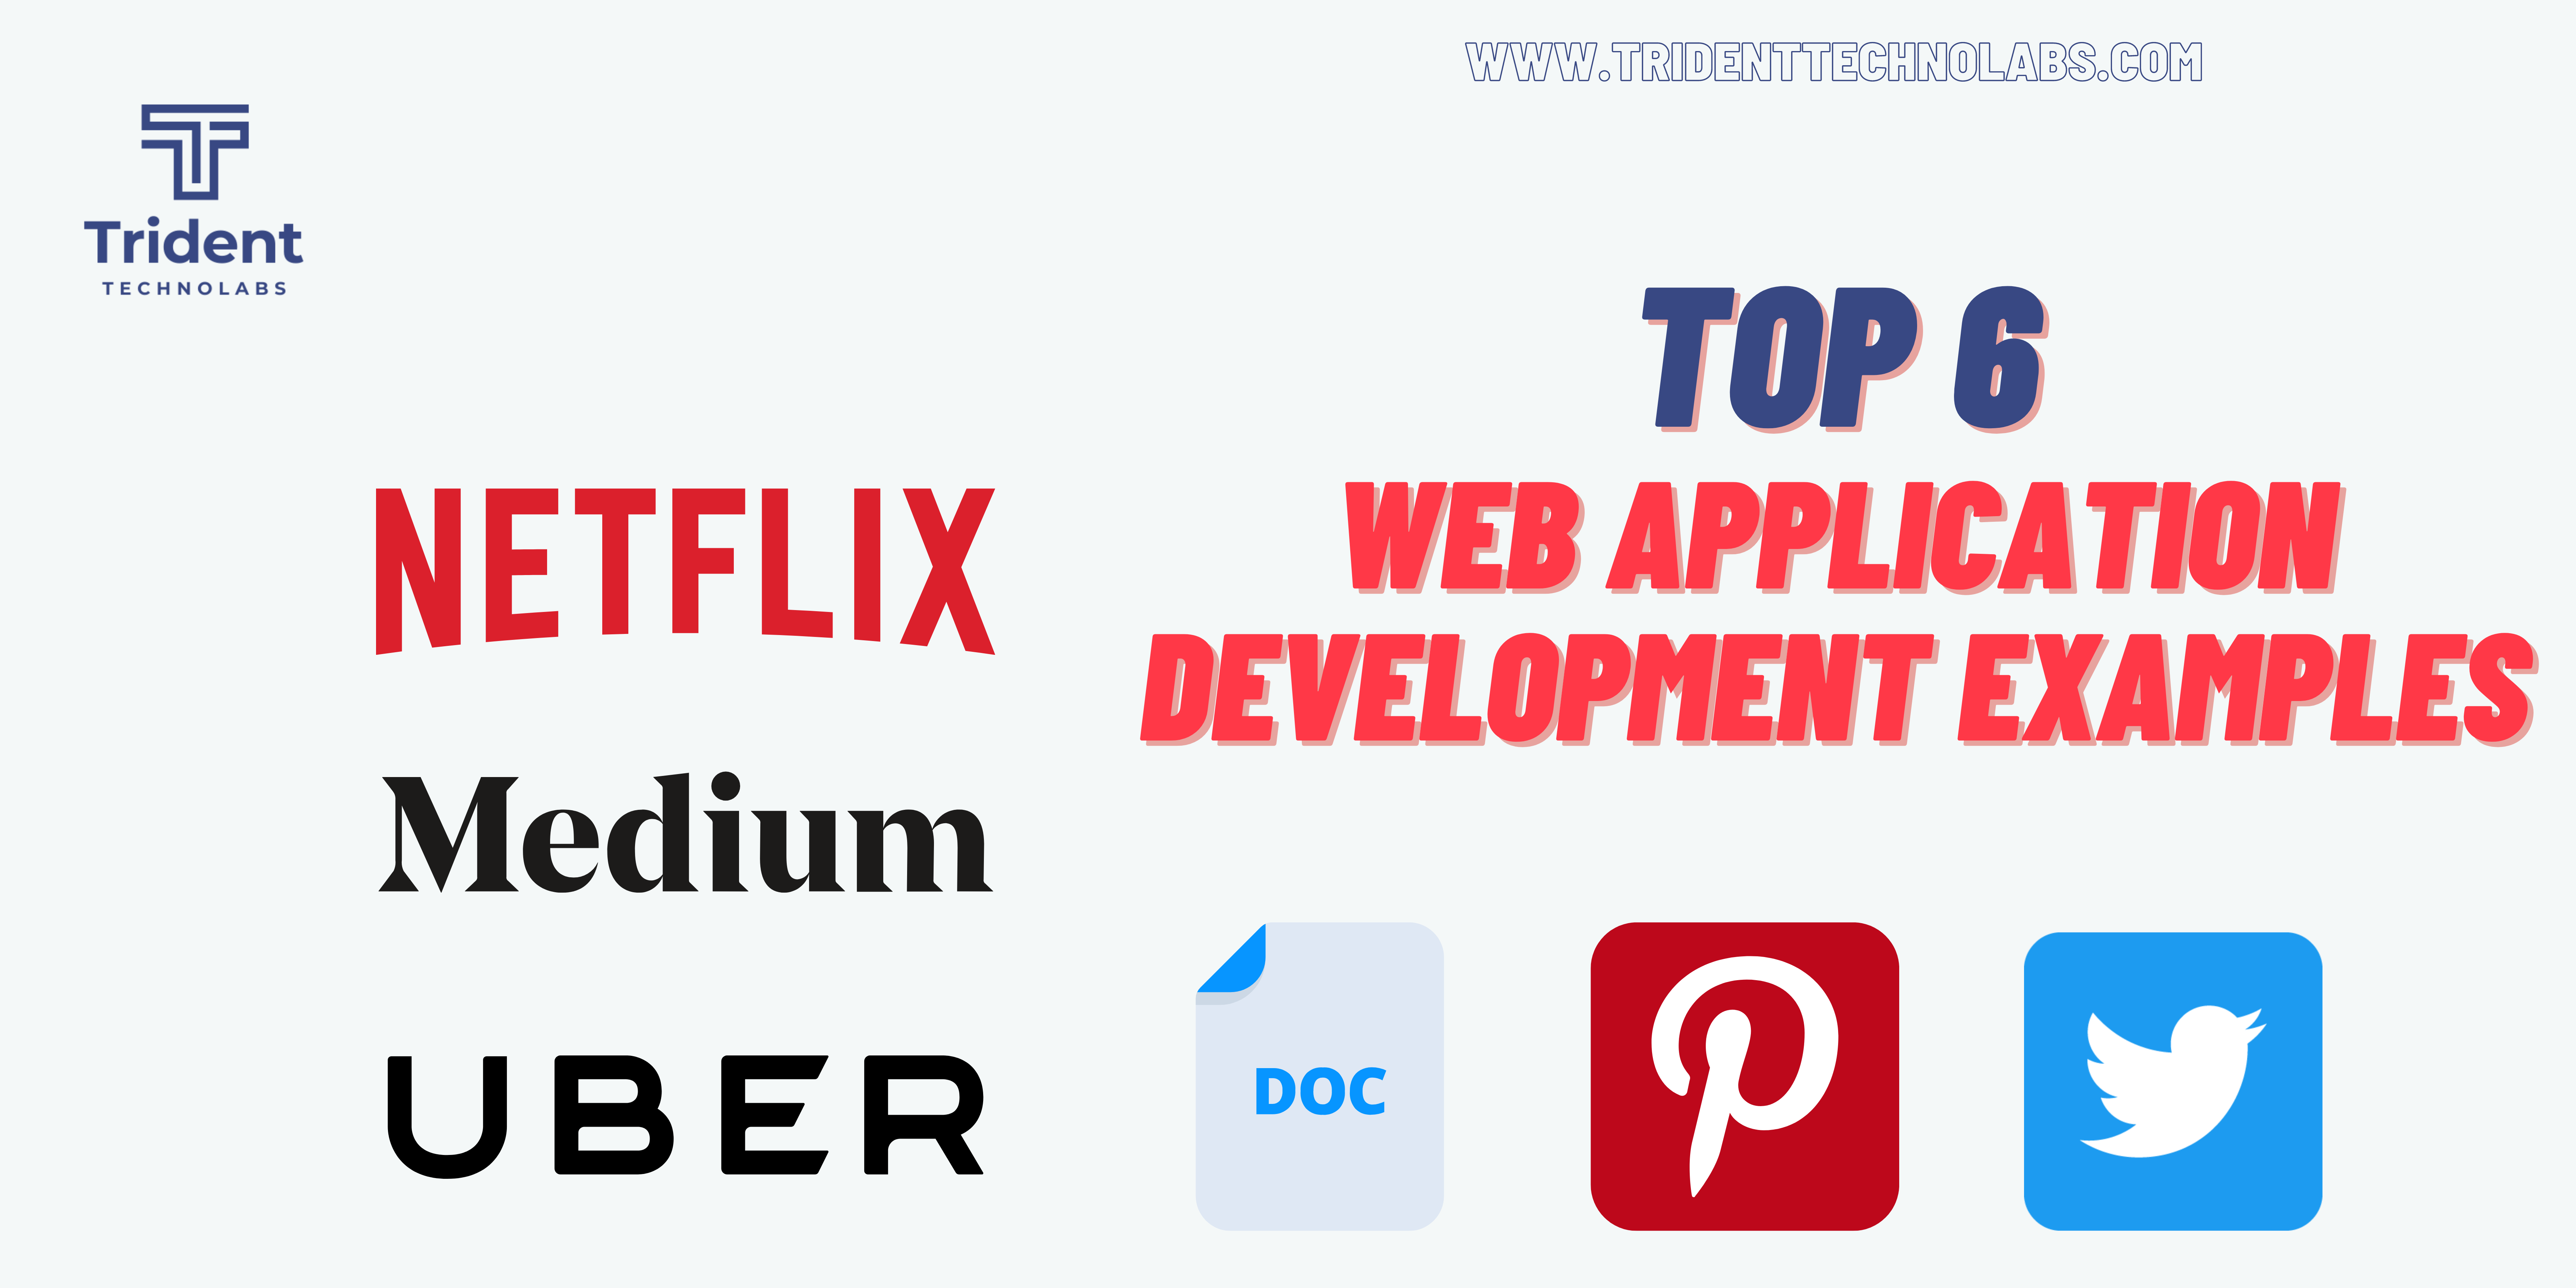 web application development examples